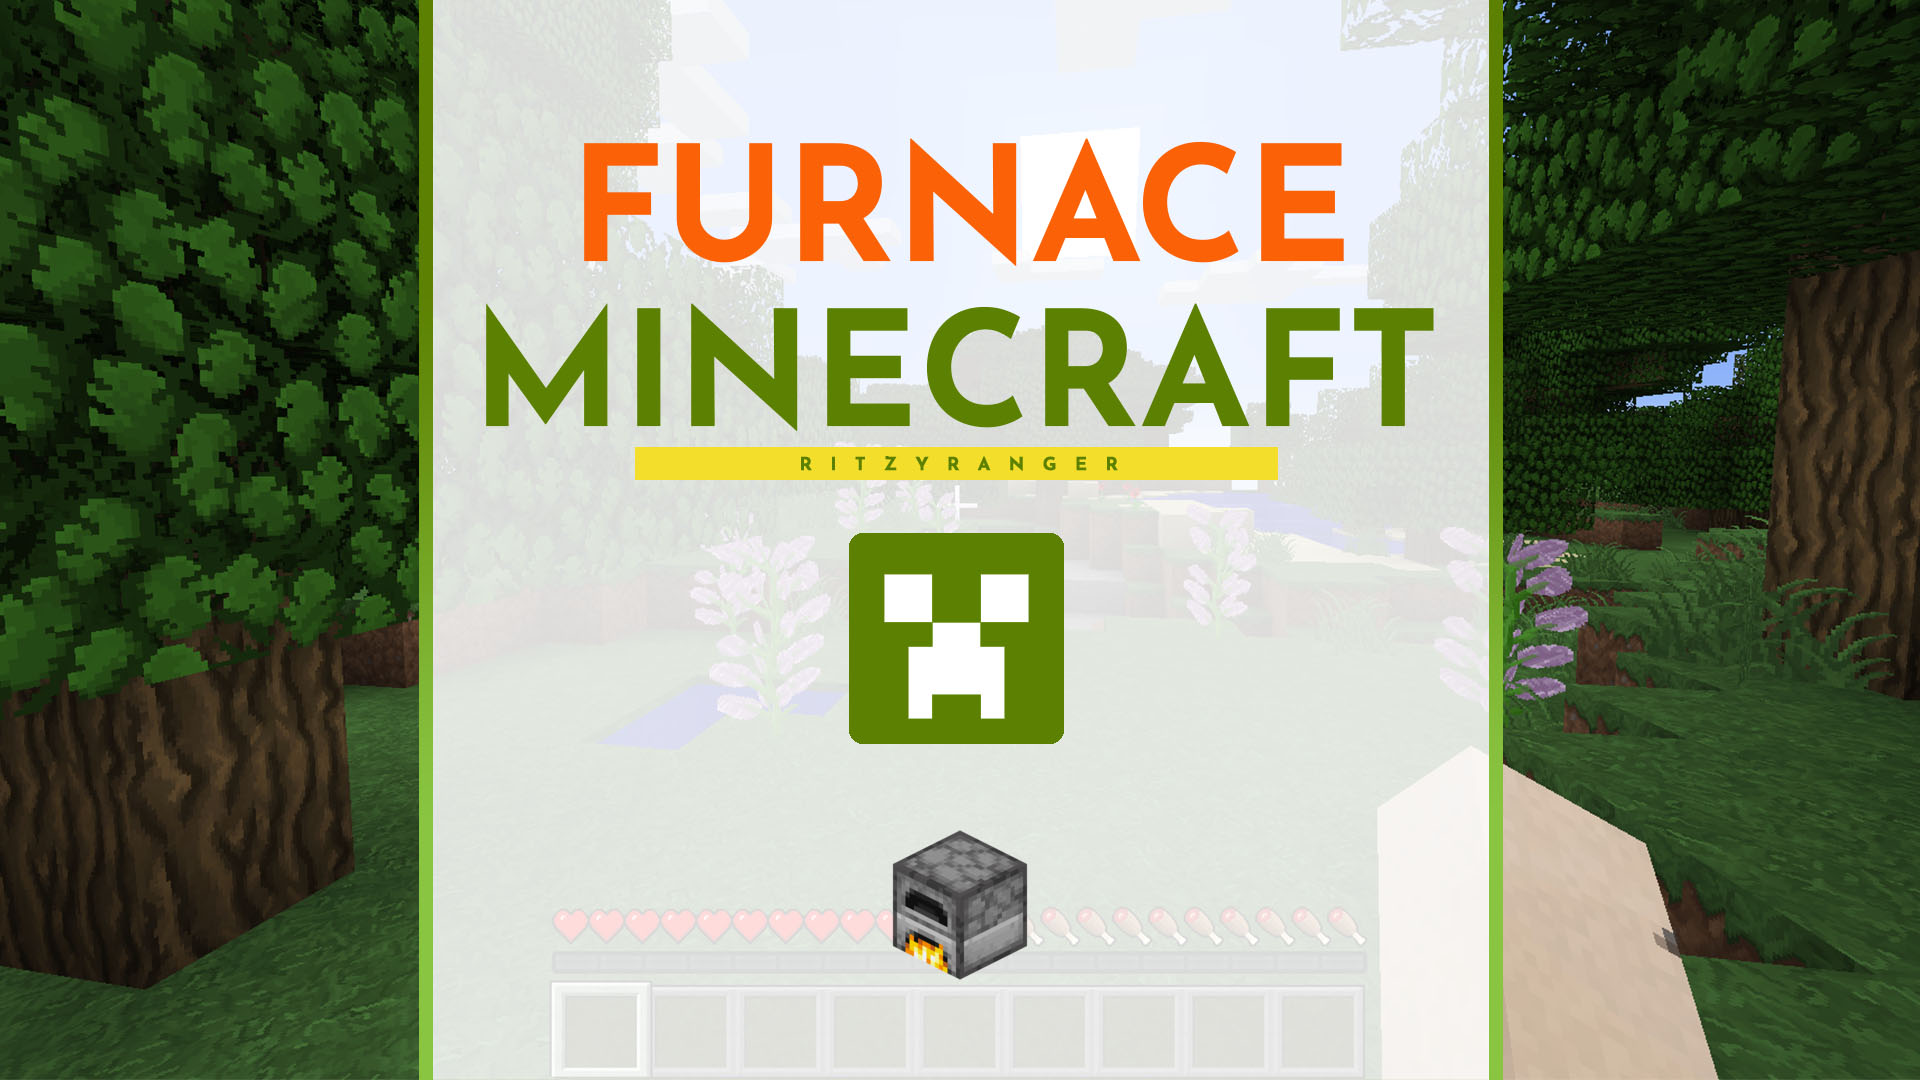 Furnace Minecraft